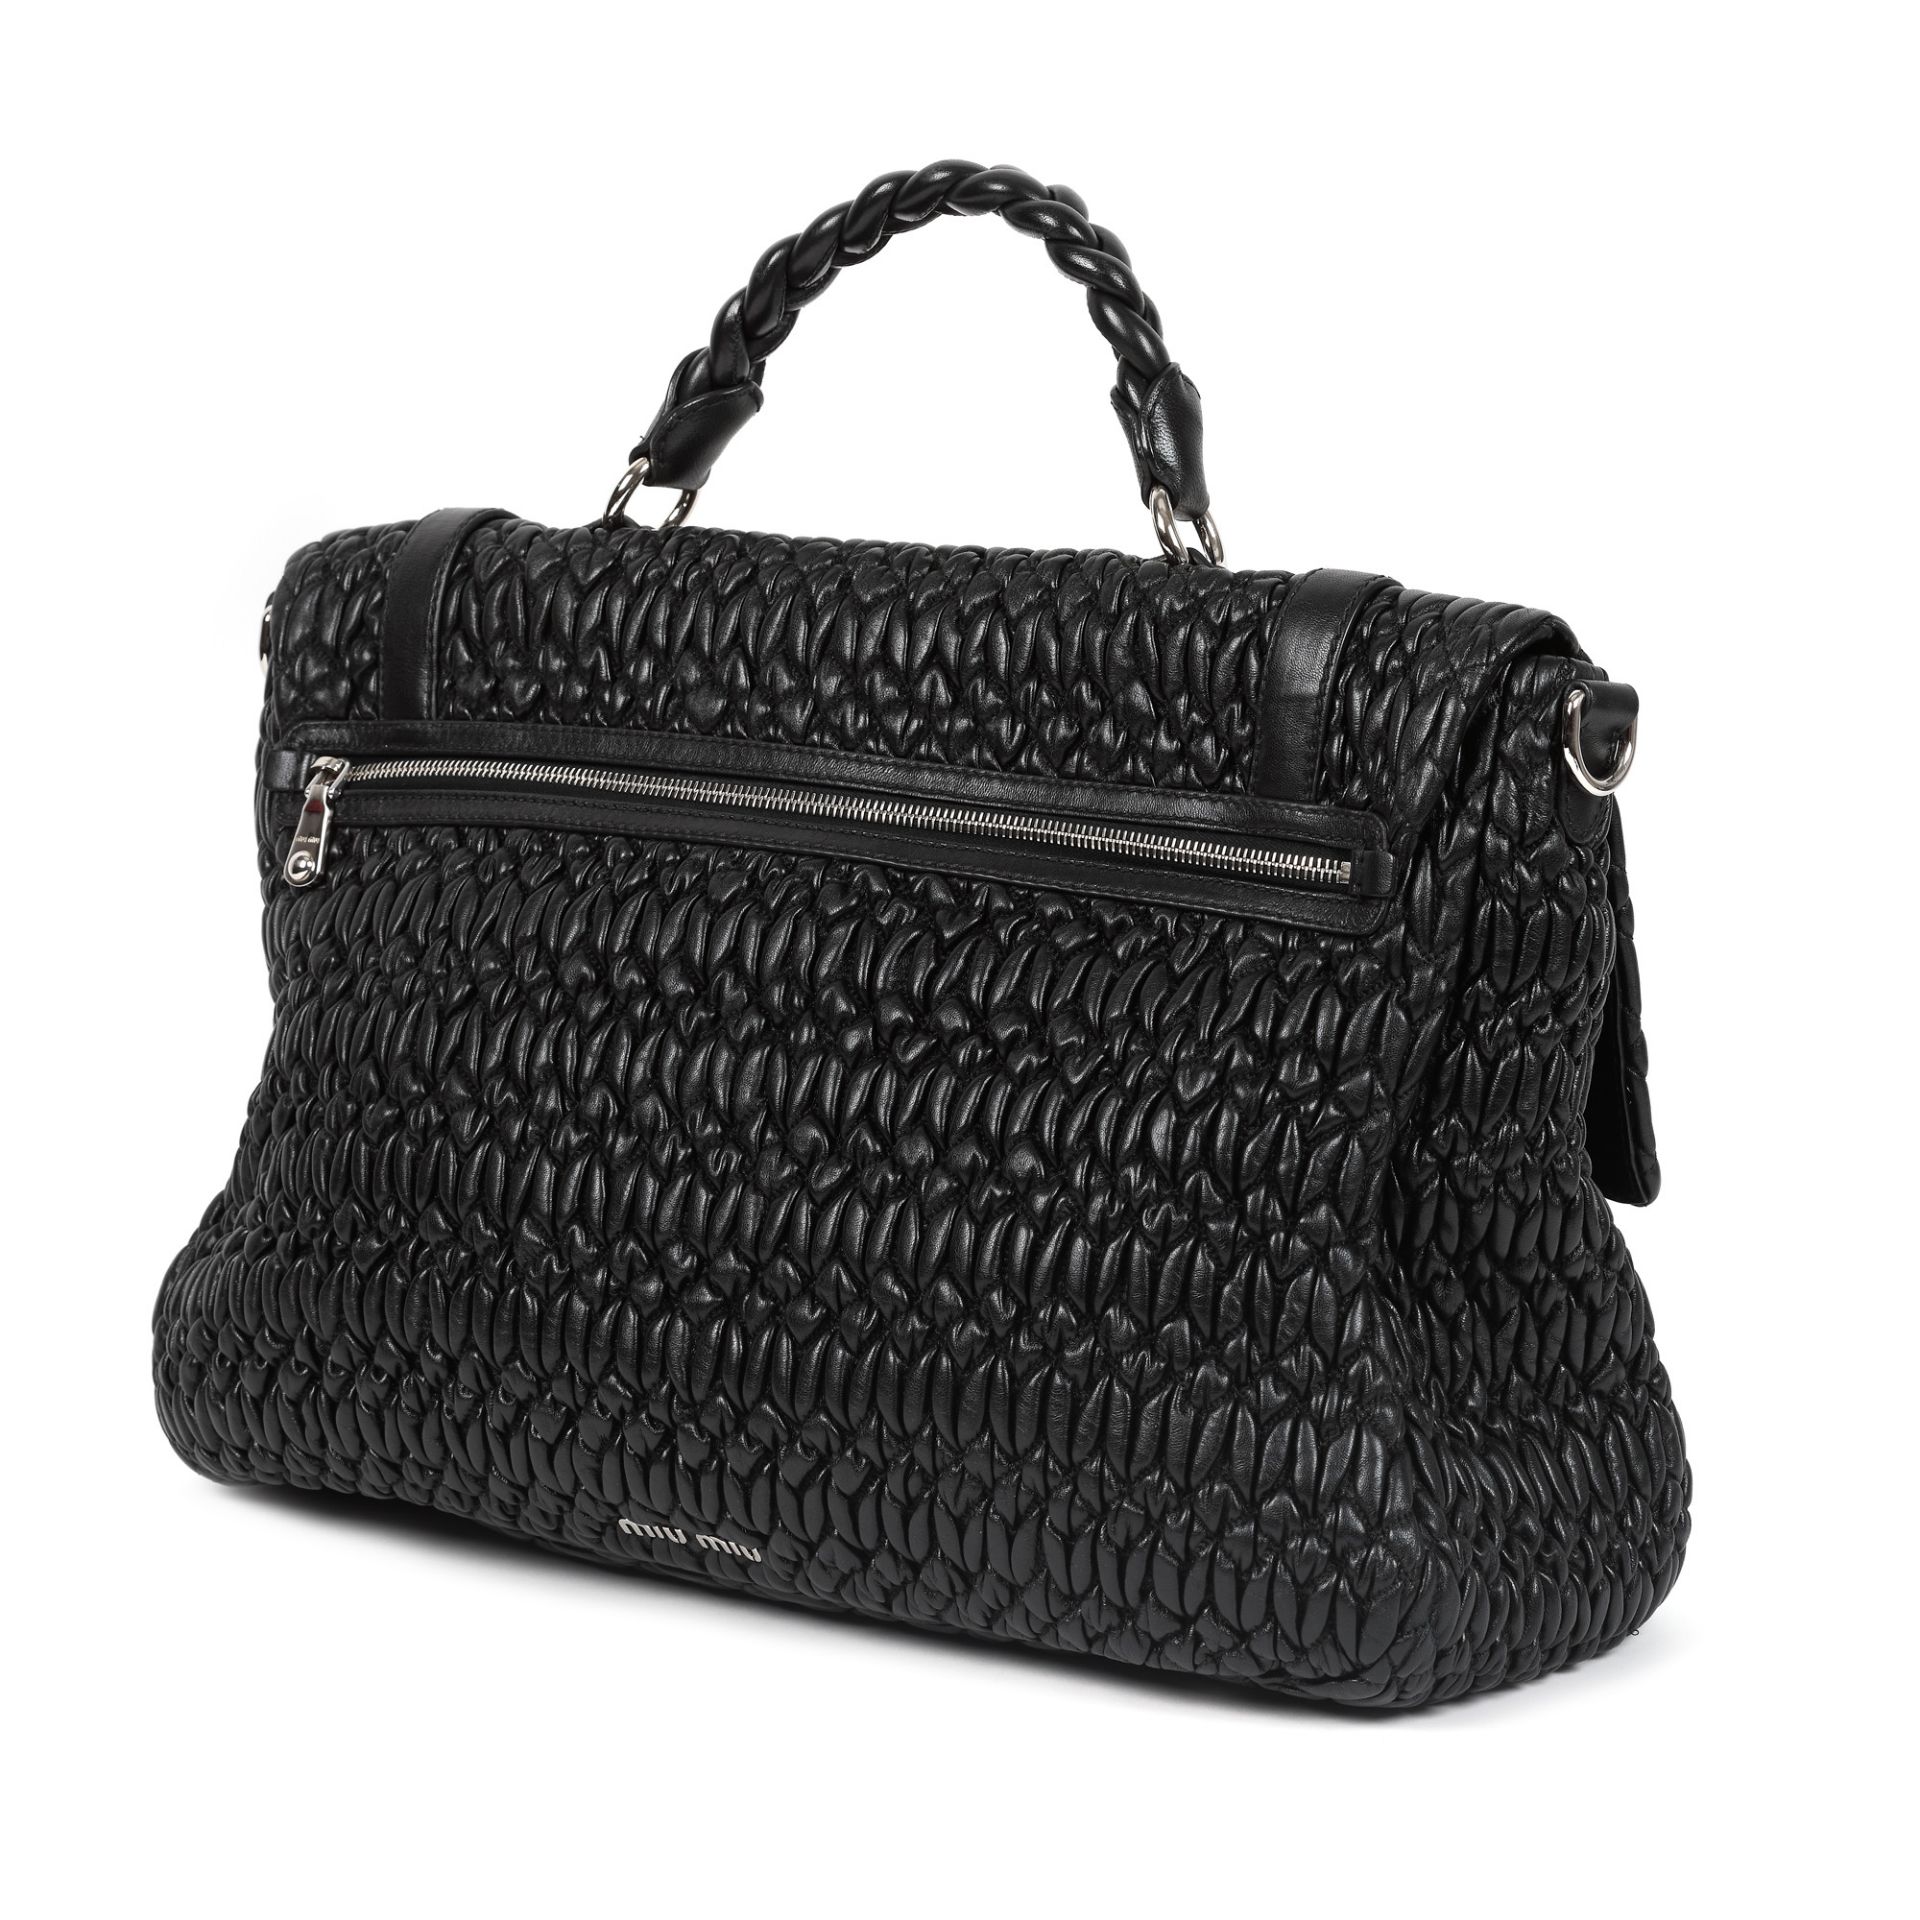 "Black Cloquet" - Miu Miu bag, Nappa leather, black - Image 3 of 4